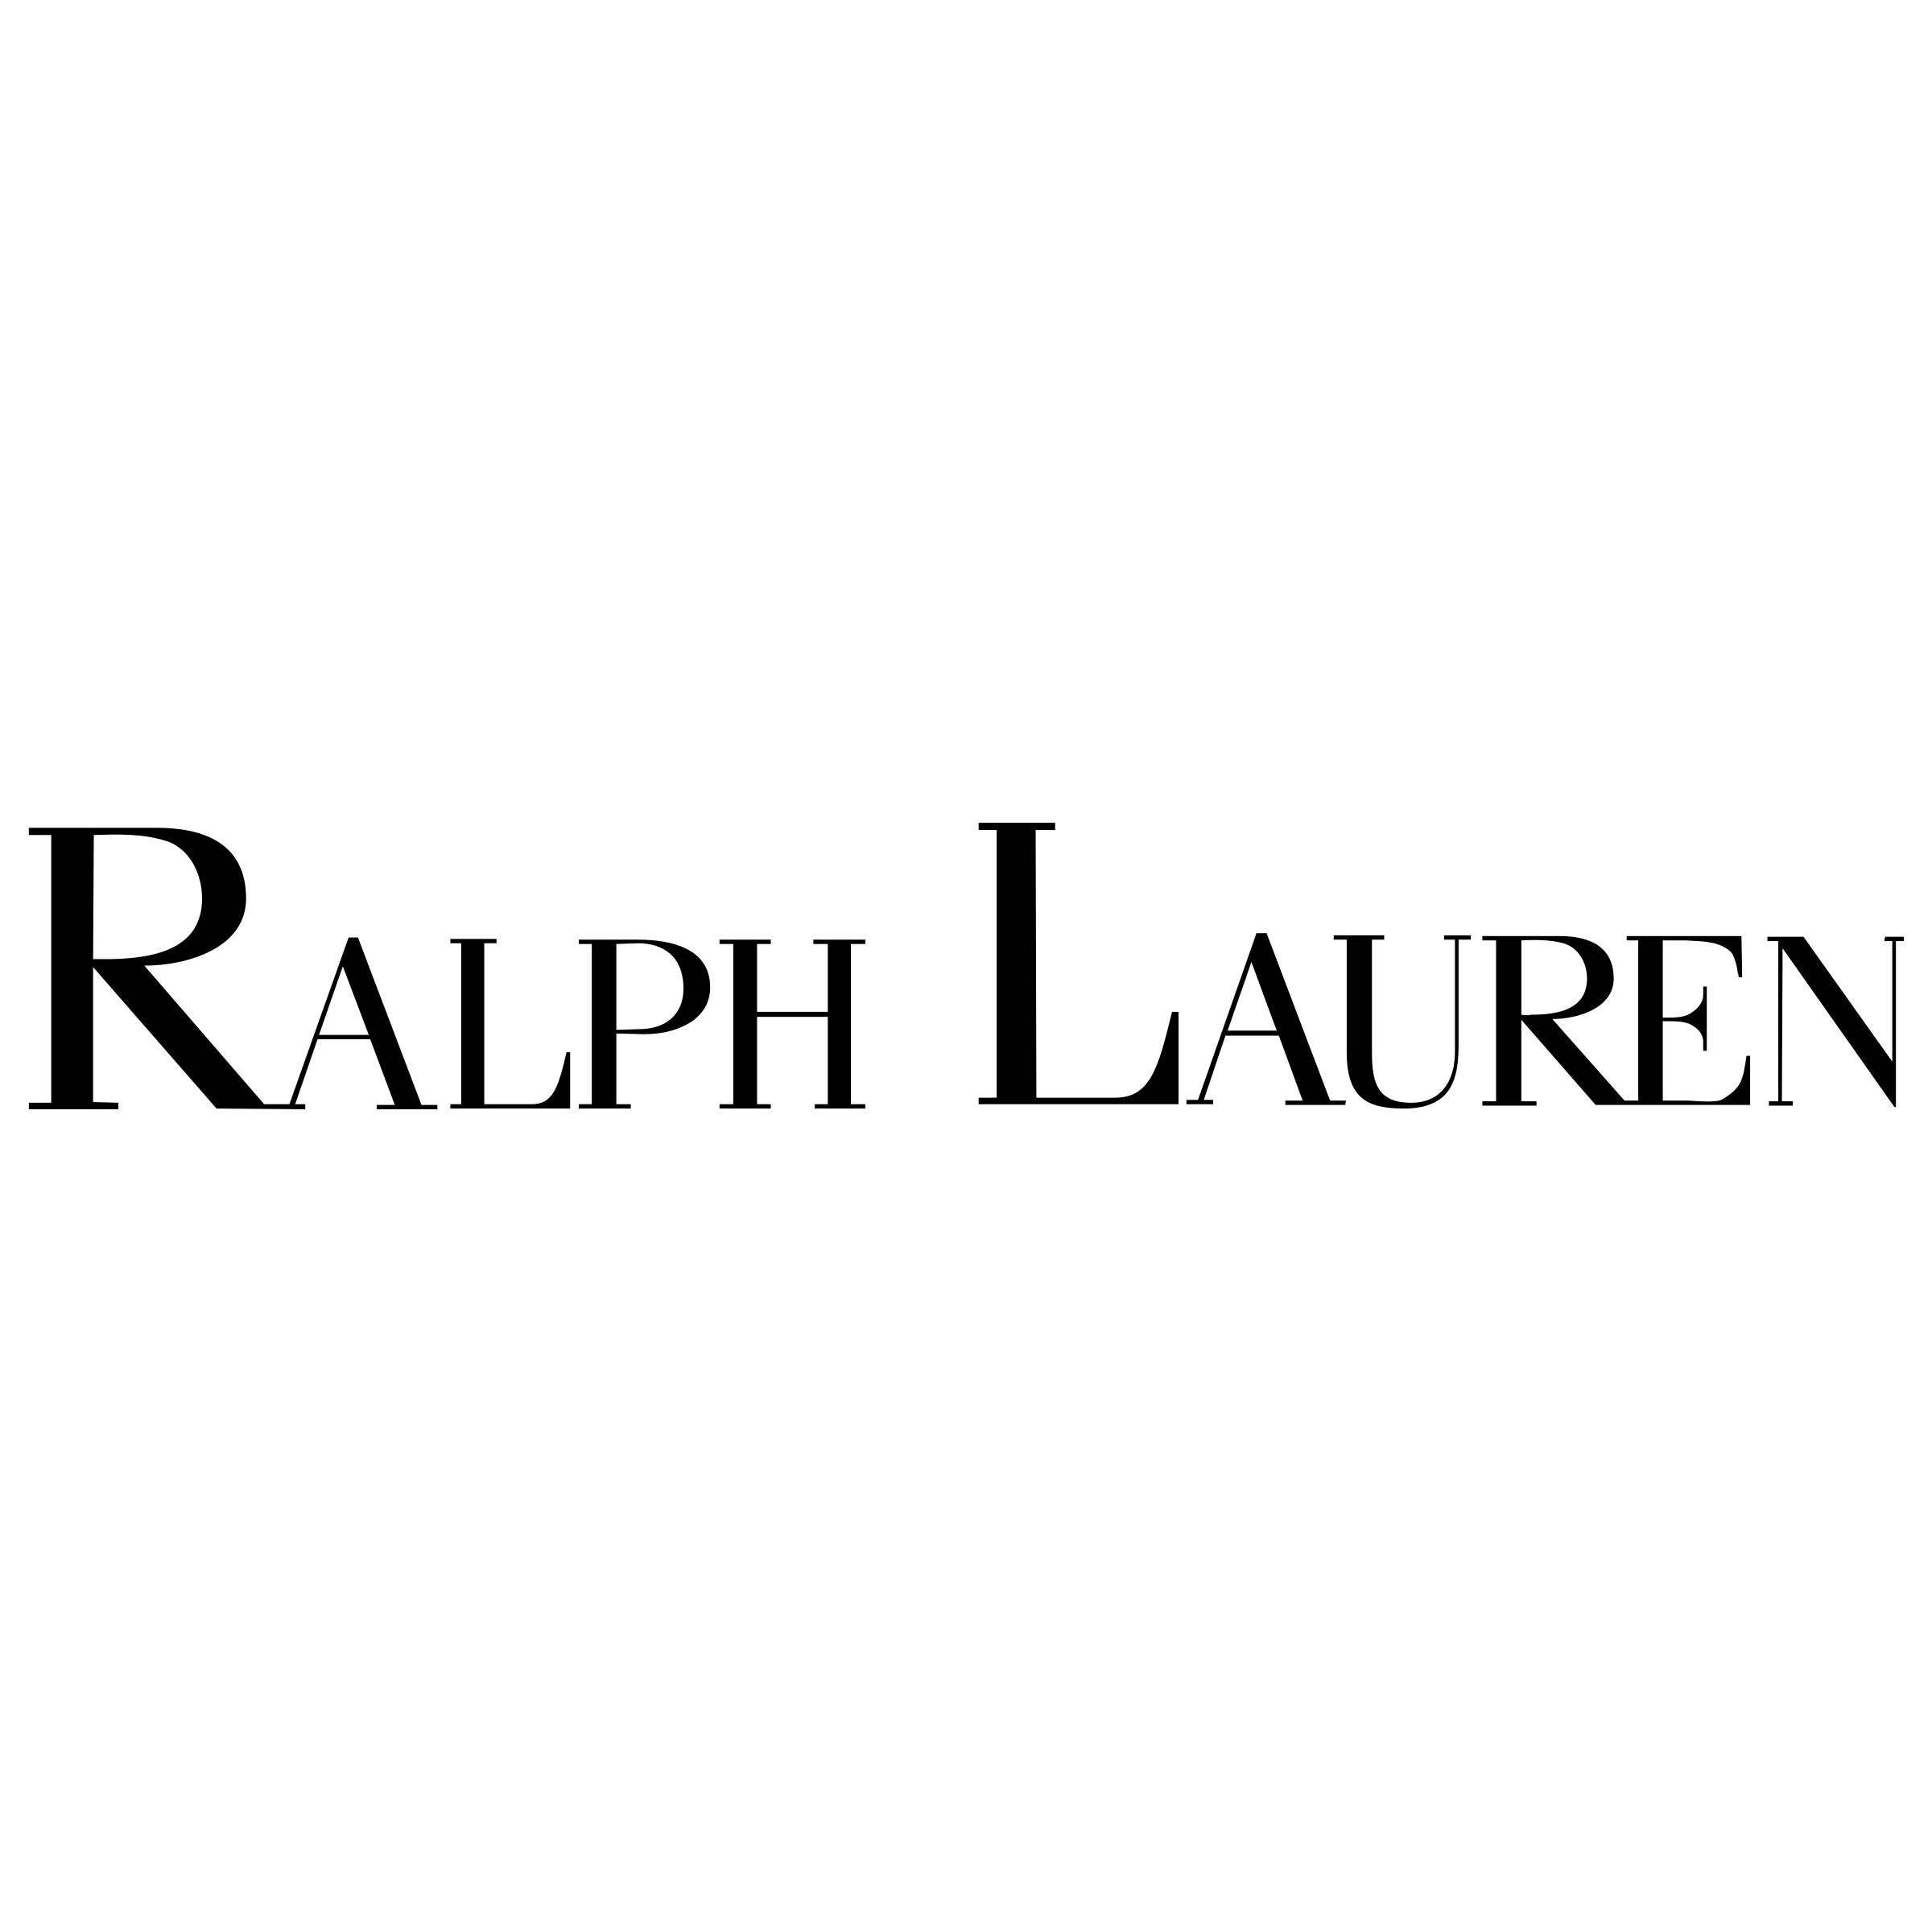 Ralph Lauren Logo - Ralph Lauren Logo PNG Transparent & SVG Vector - Freebie Supply